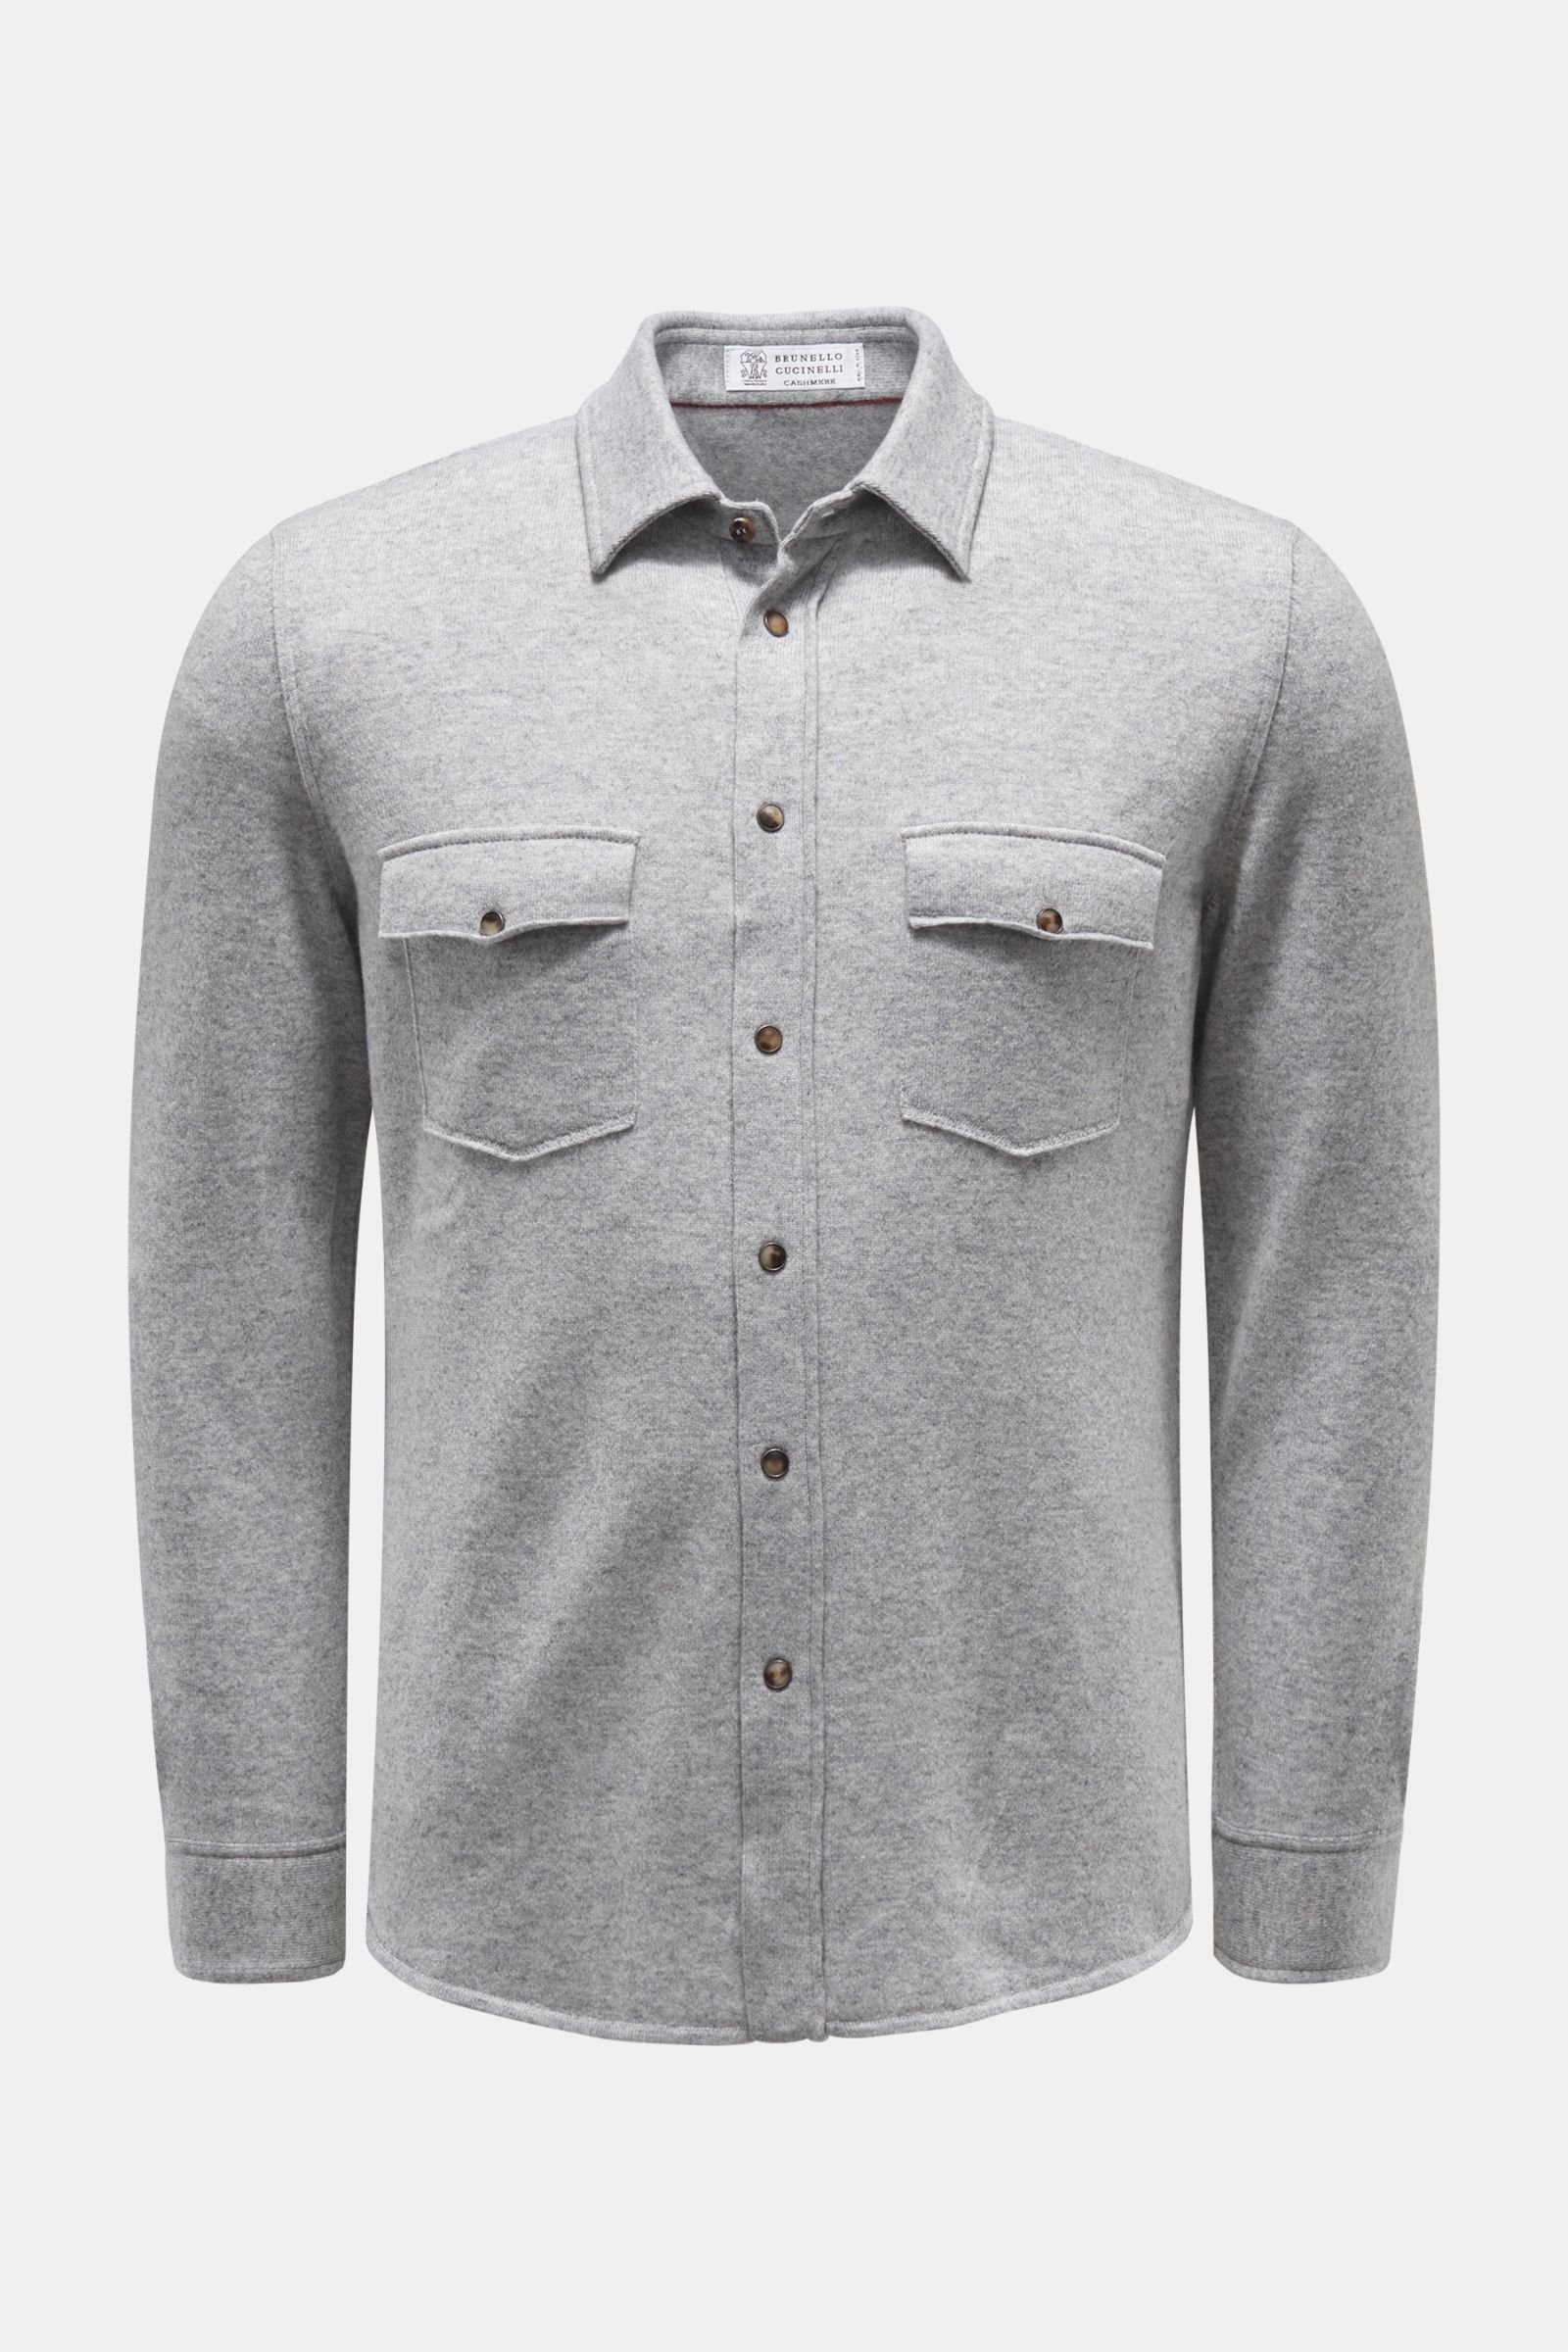 Overshirt light grey